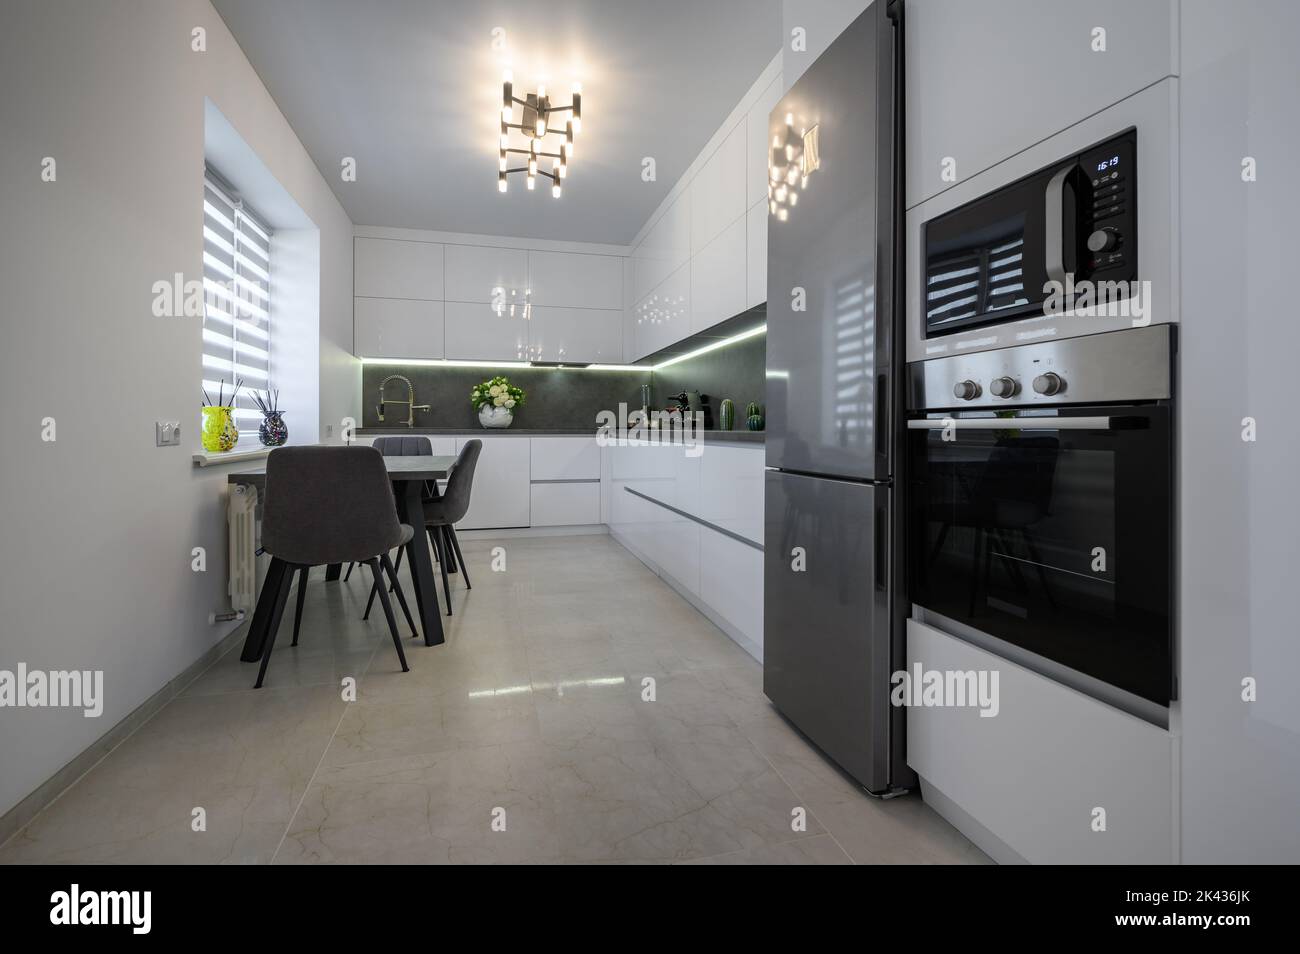 https://c8.alamy.com/comp/2K436JK/white-modern-kitchen-with-granite-counter-top-and-marble-floor-2K436JK.jpg